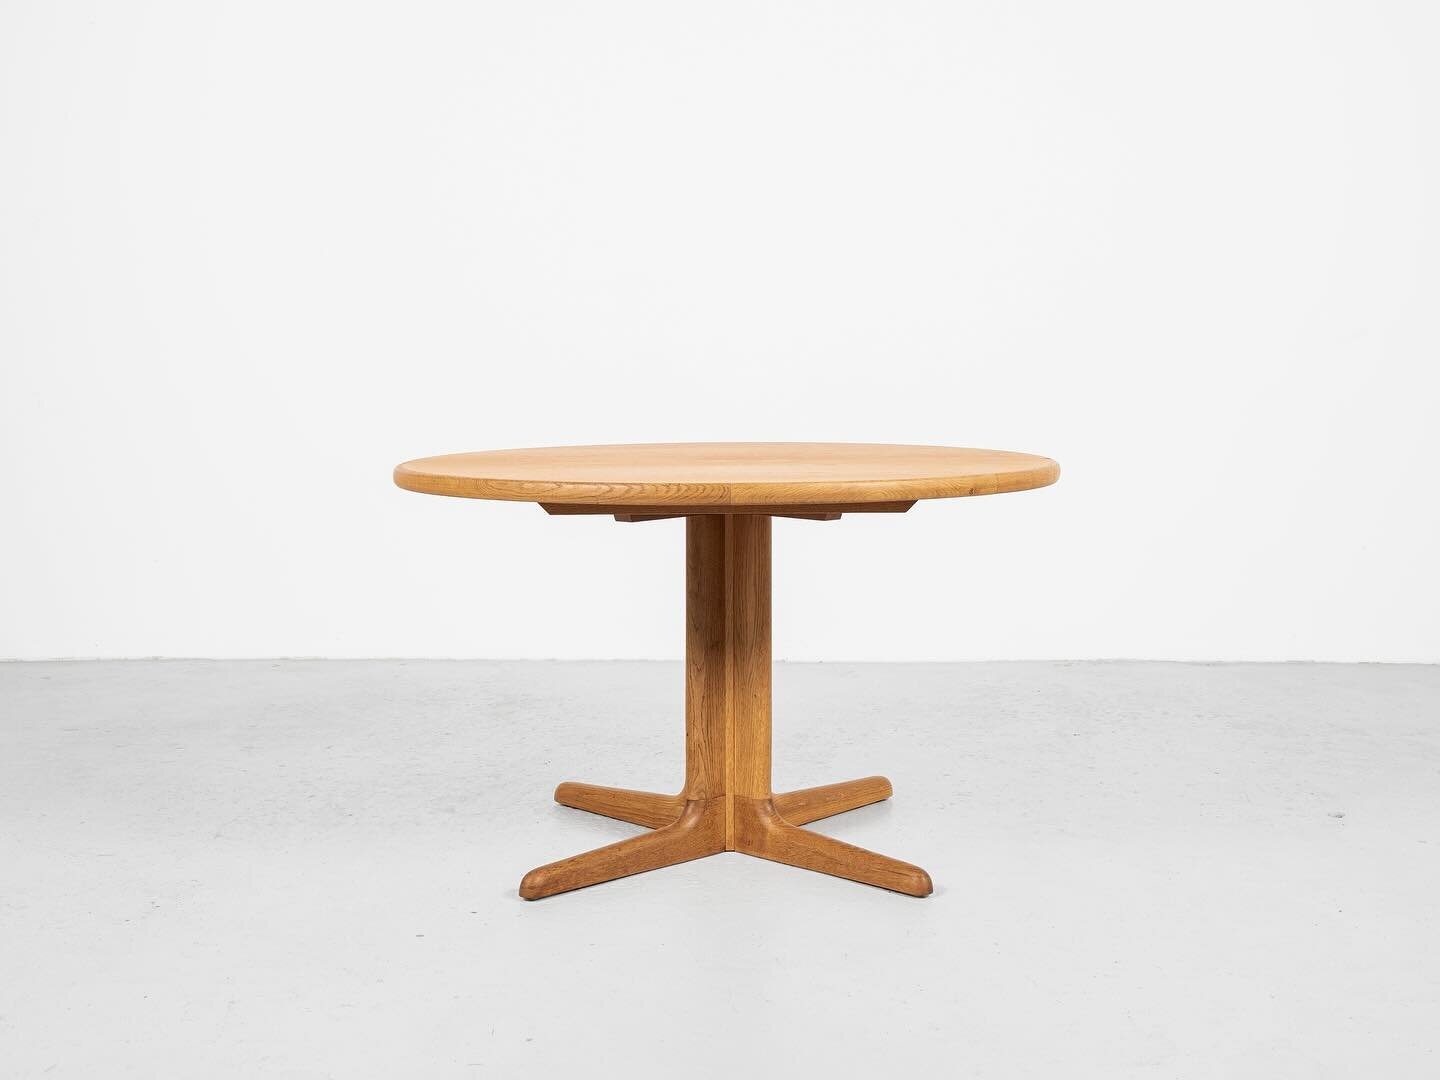 Midcentury Danish round extendable dining table in oak by Skovby 1960s #m&oslash;belfabrik #skovbyfurniture #midcenturymodern #midcenturydanishfurniture